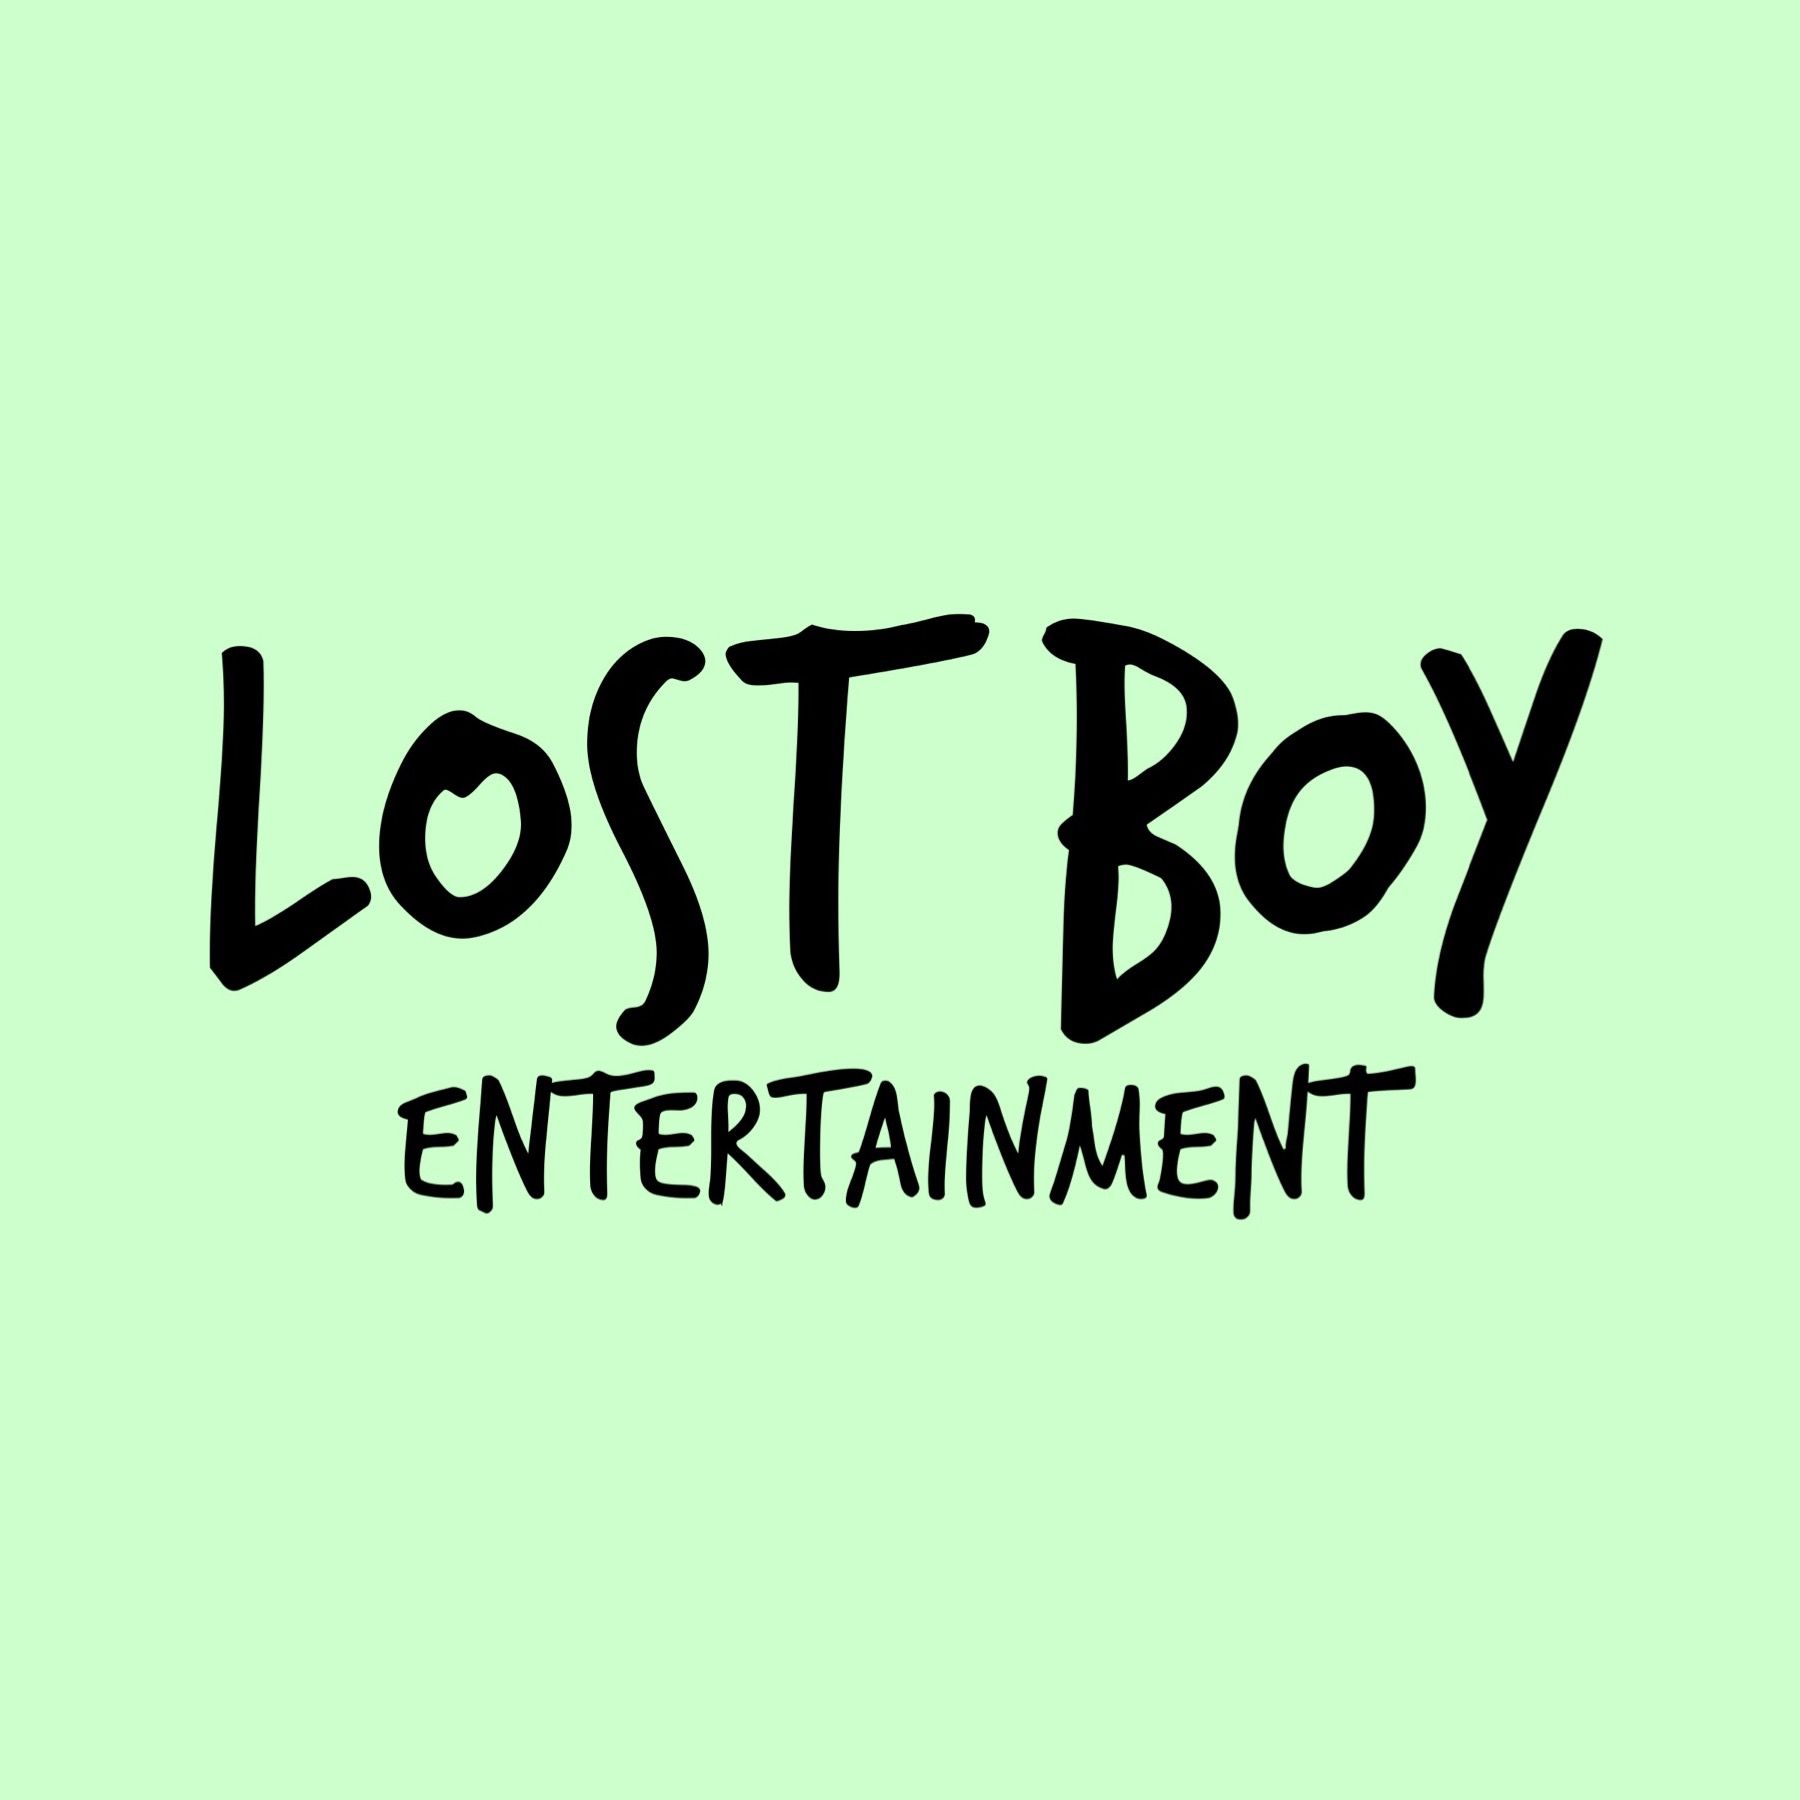 Brand: Lost Boy Entertainment